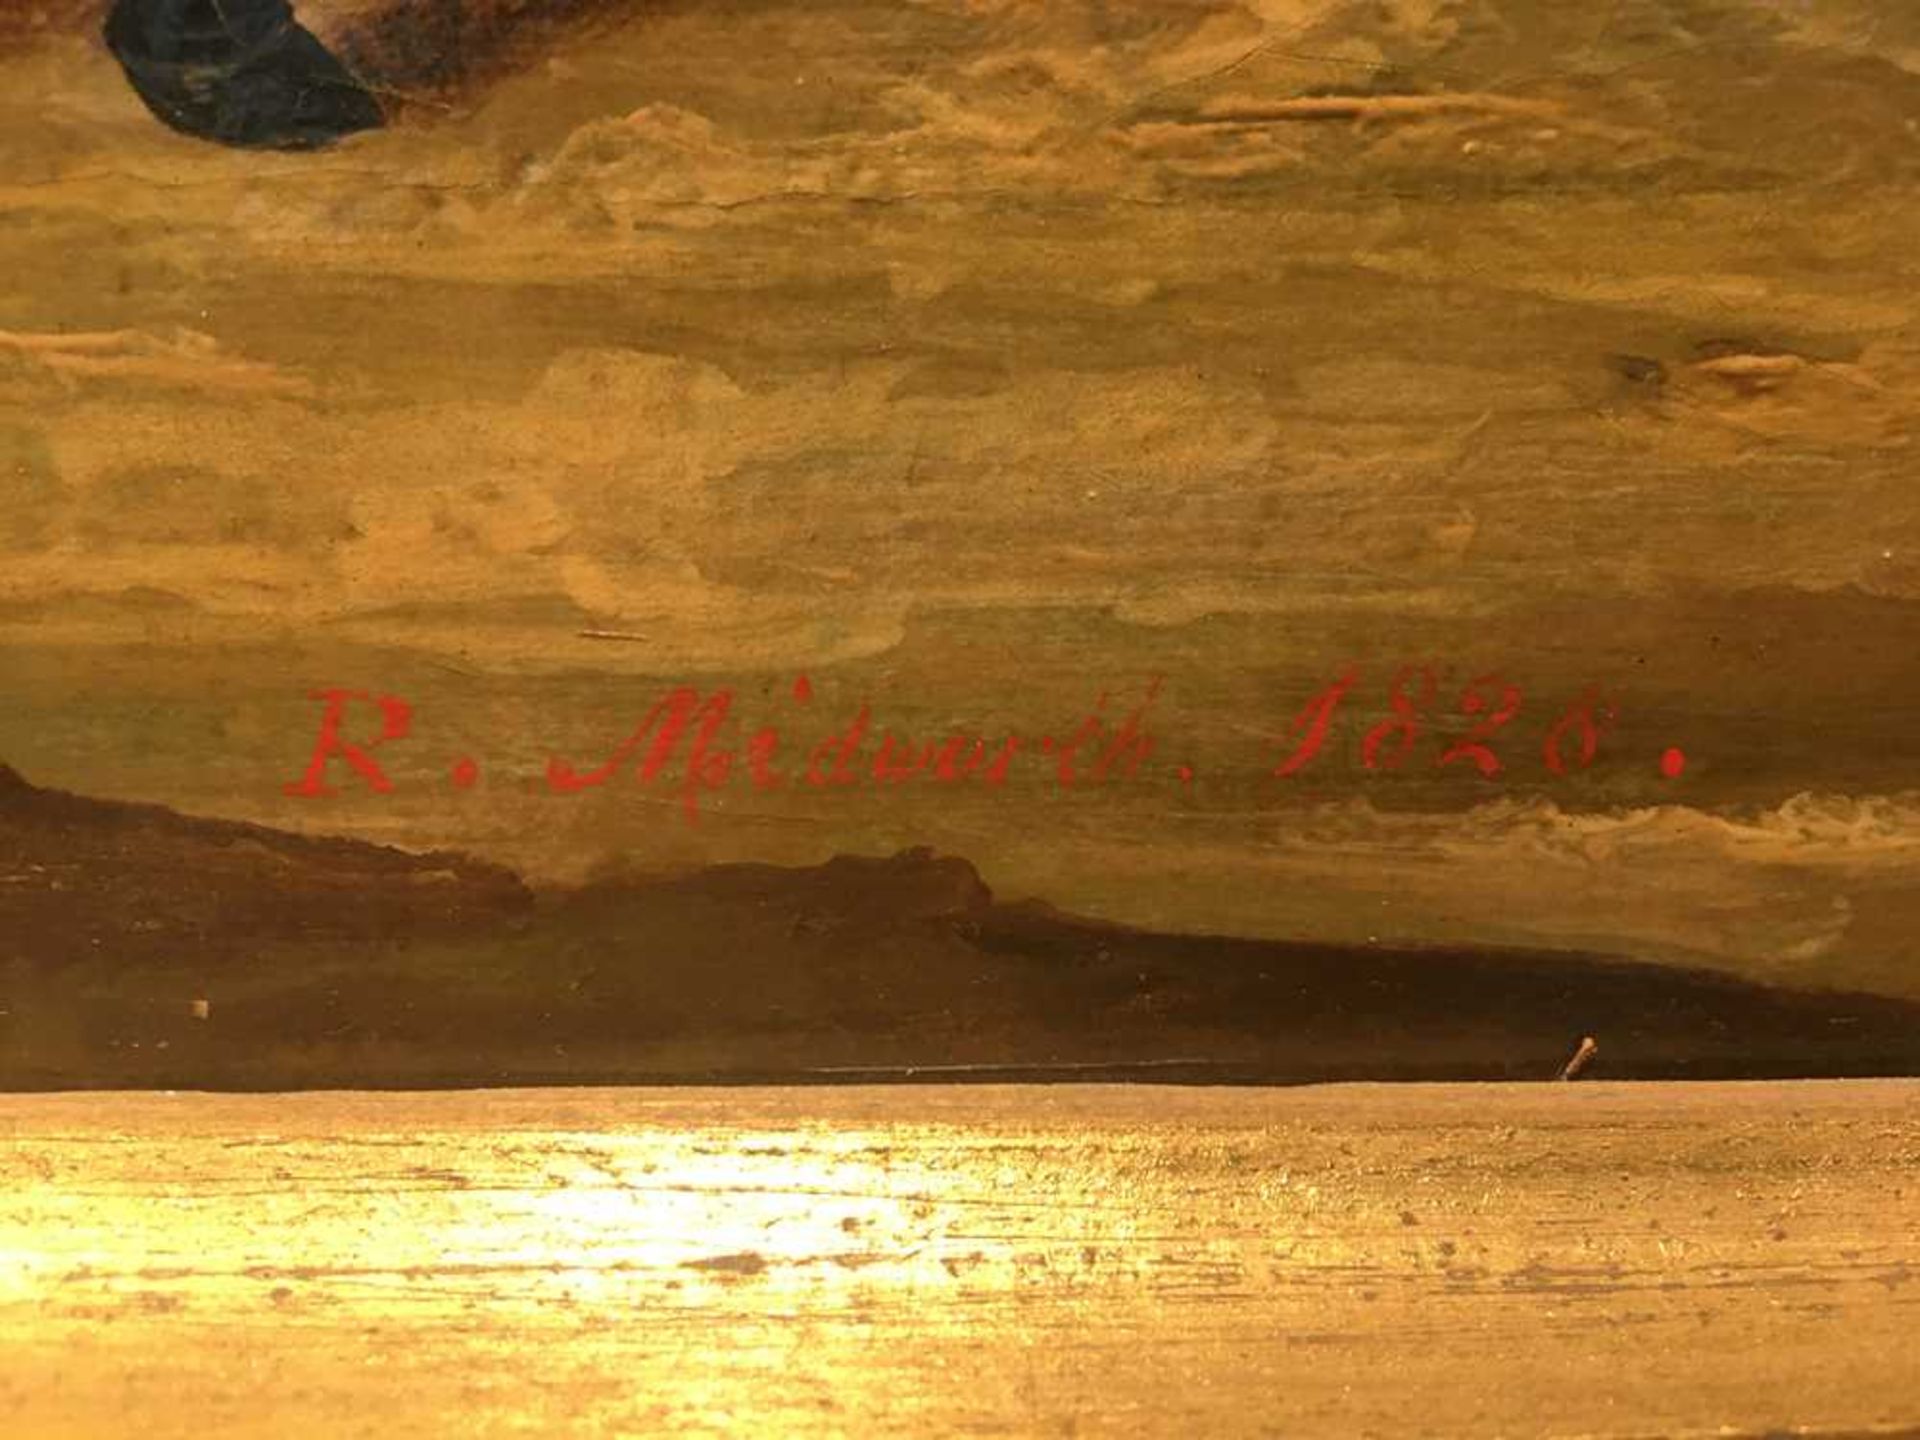 R**MIDWORTH (BRITISH 19TH CENTURY) MATILDA, WINNER OF ST.LEDGER 1827 WITH JAMES ROBINSON UP - Image 5 of 8